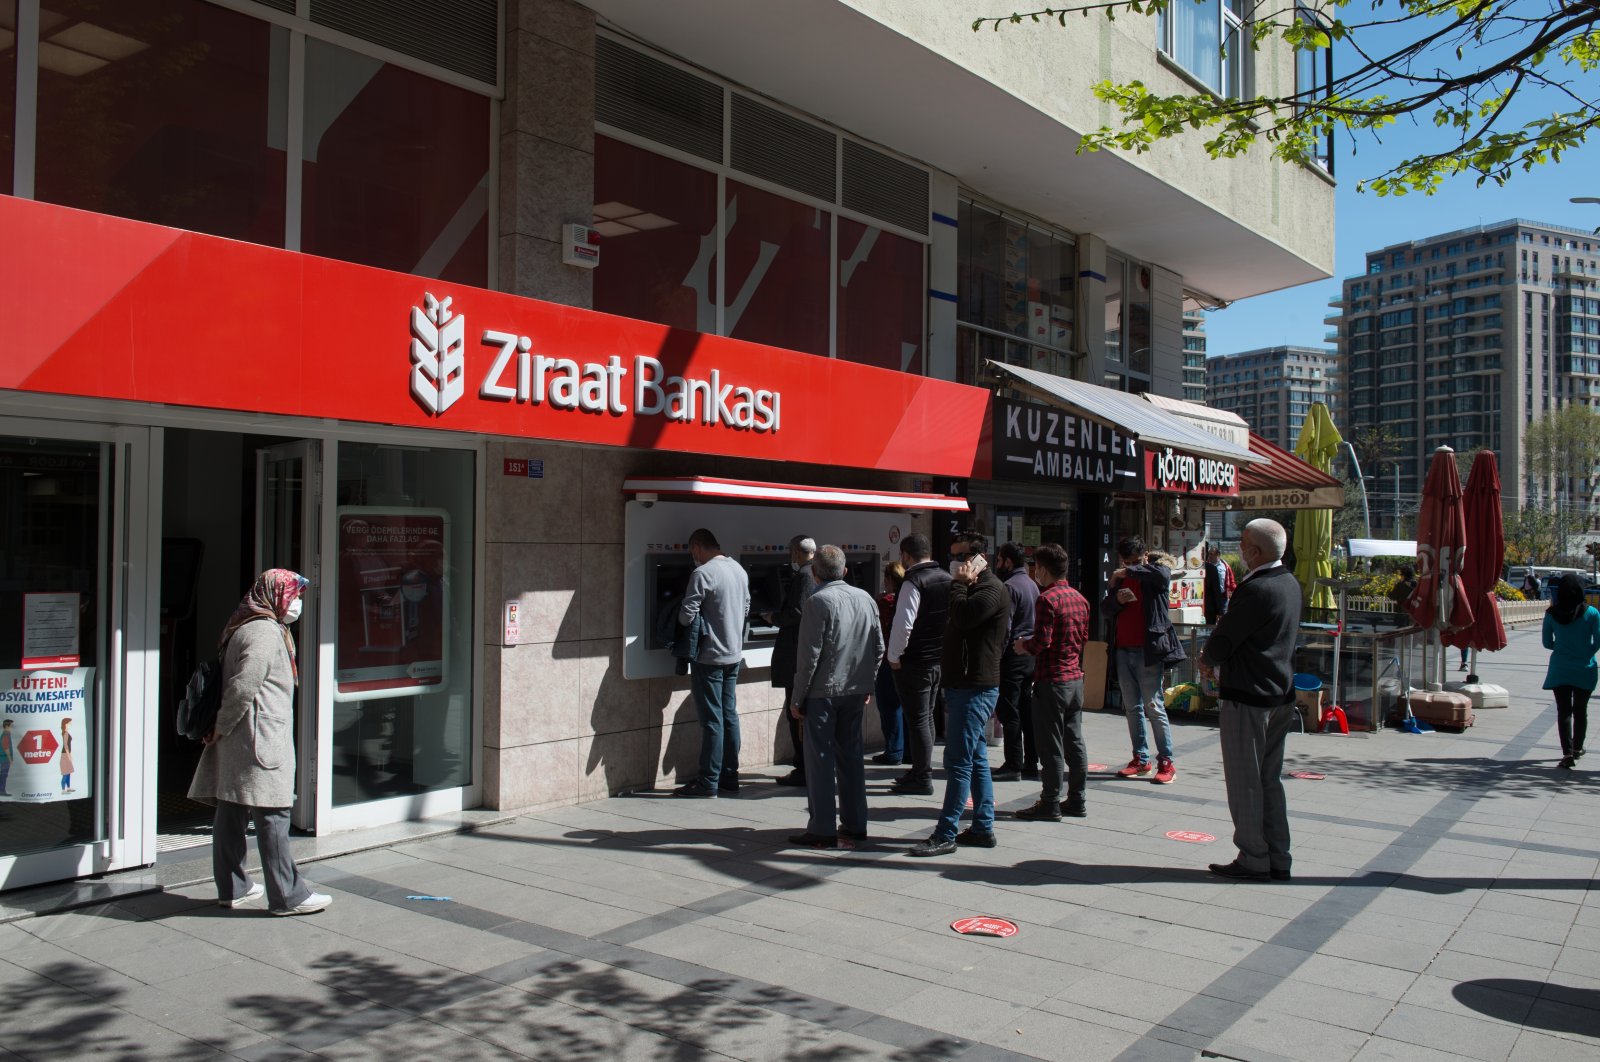 People are seen waiting in front of a Ziraat Bank branch in Zeytinburnu district, Istanbul, Turkey, April 30, 2020. (Shutterstock Photo)
